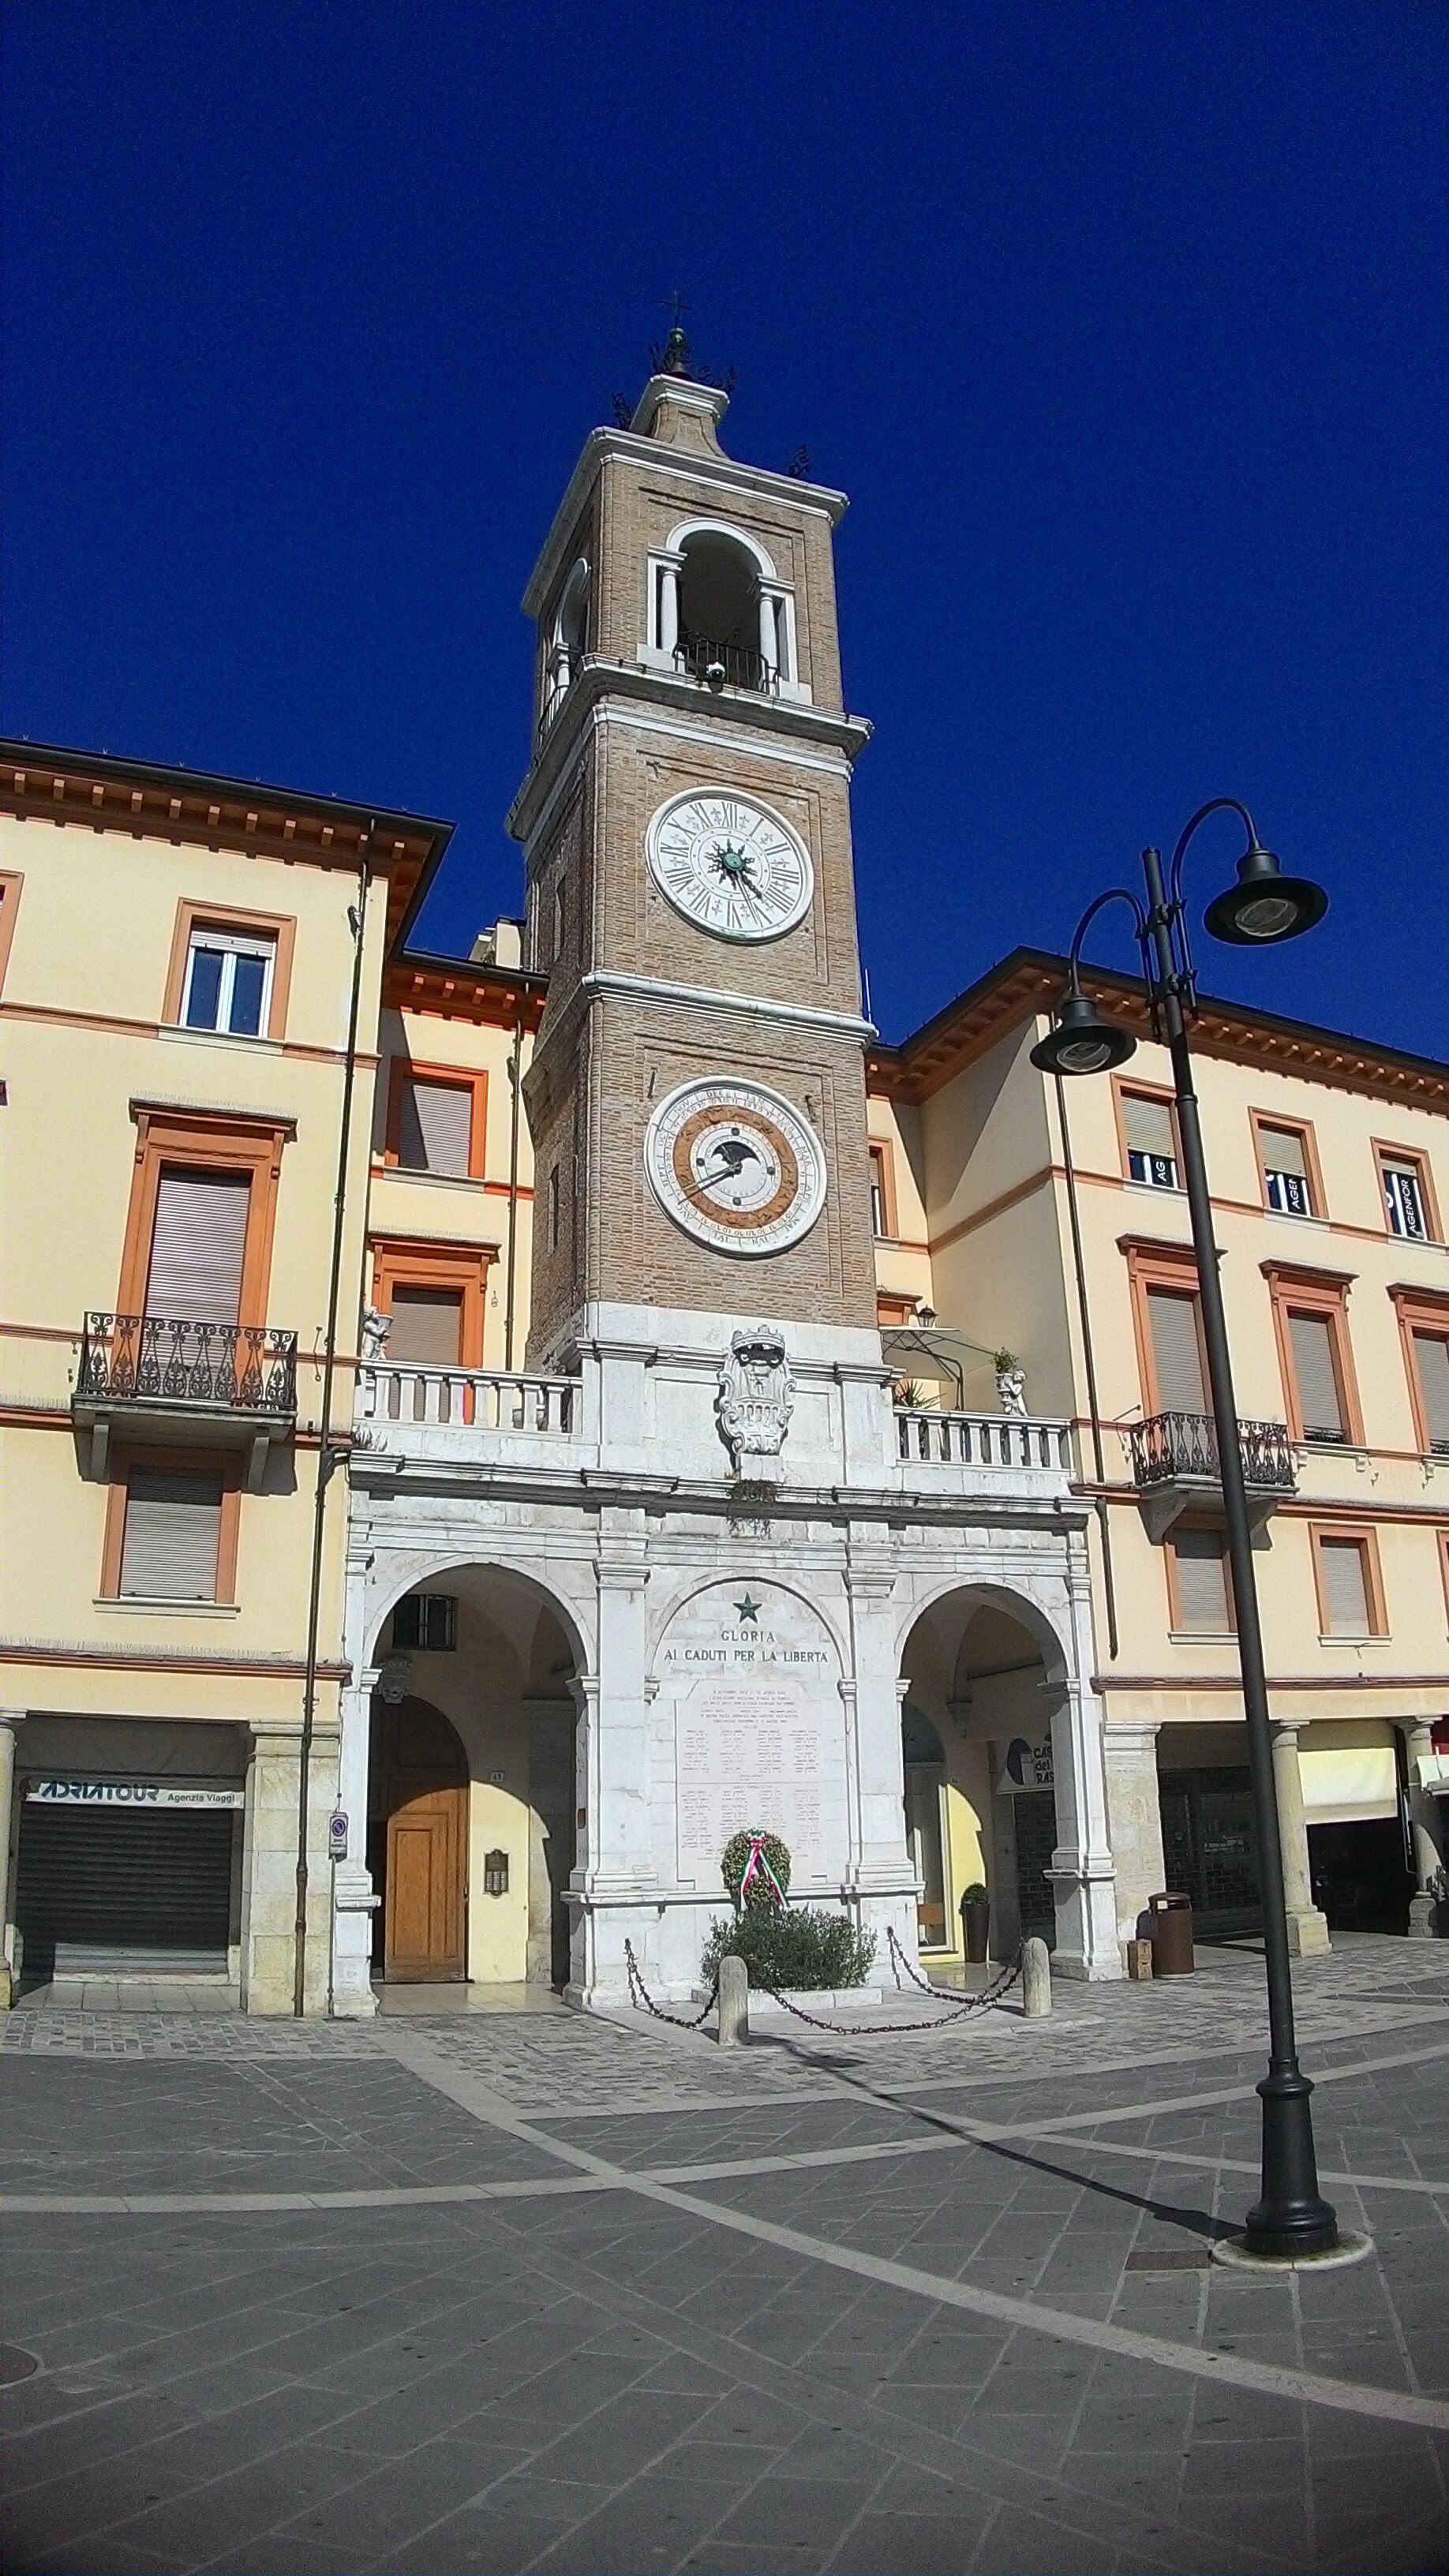 foto: https://upload.wikimedia.org/wikipedia/commons/e/e1/Torre_dell%27orologio%2C_Rimini.jpg